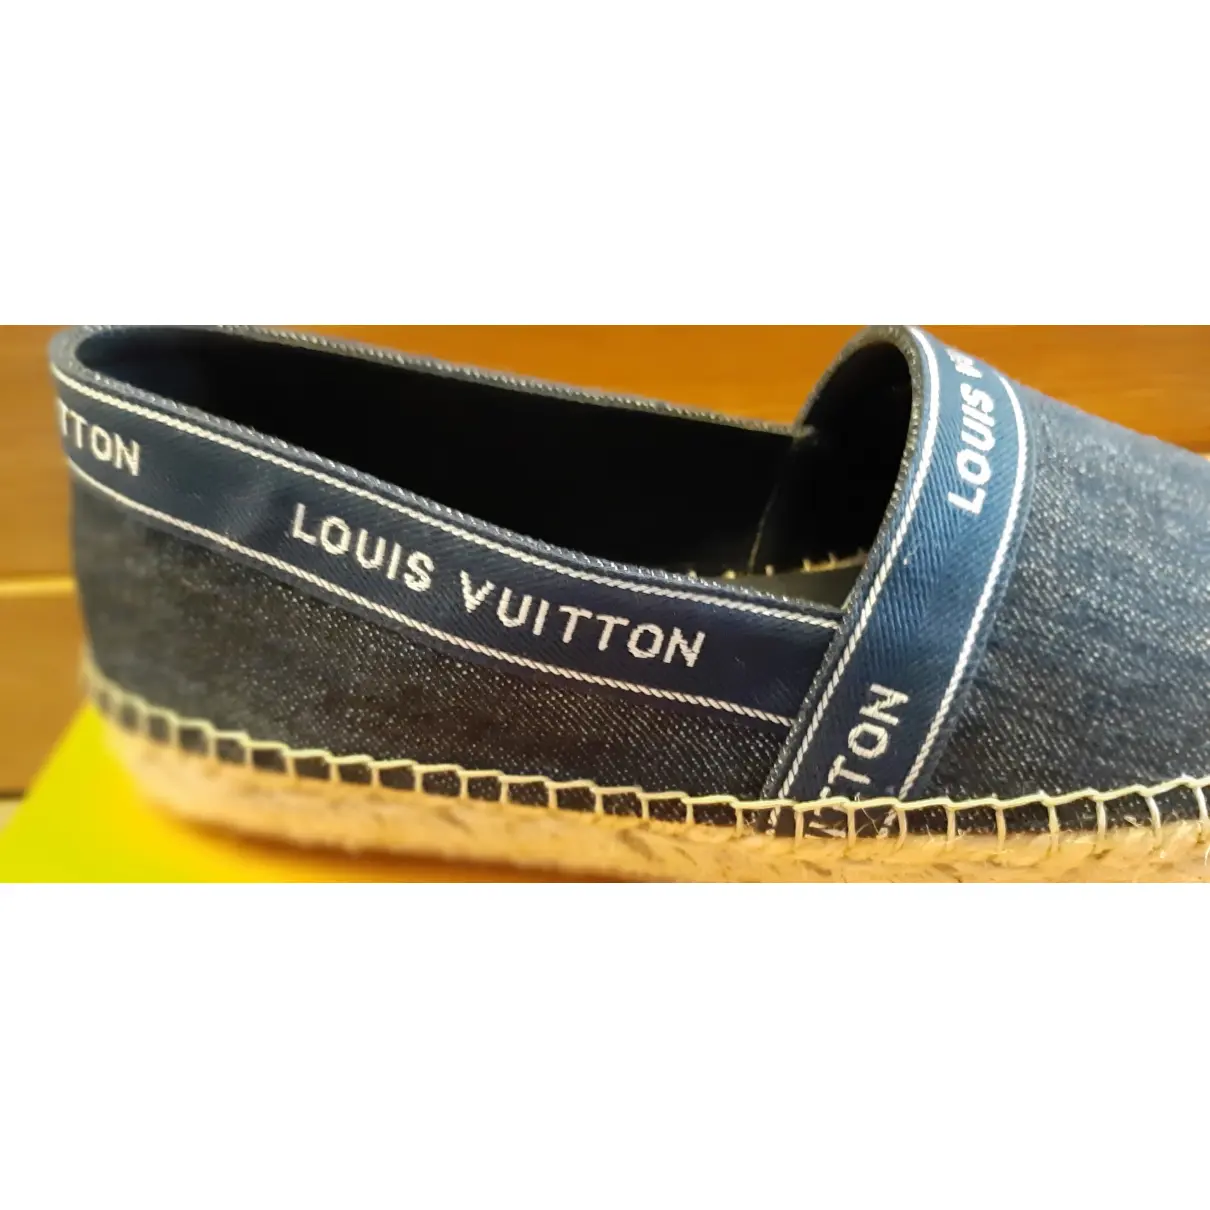 Buy Louis Vuitton Seashore espadrilles online